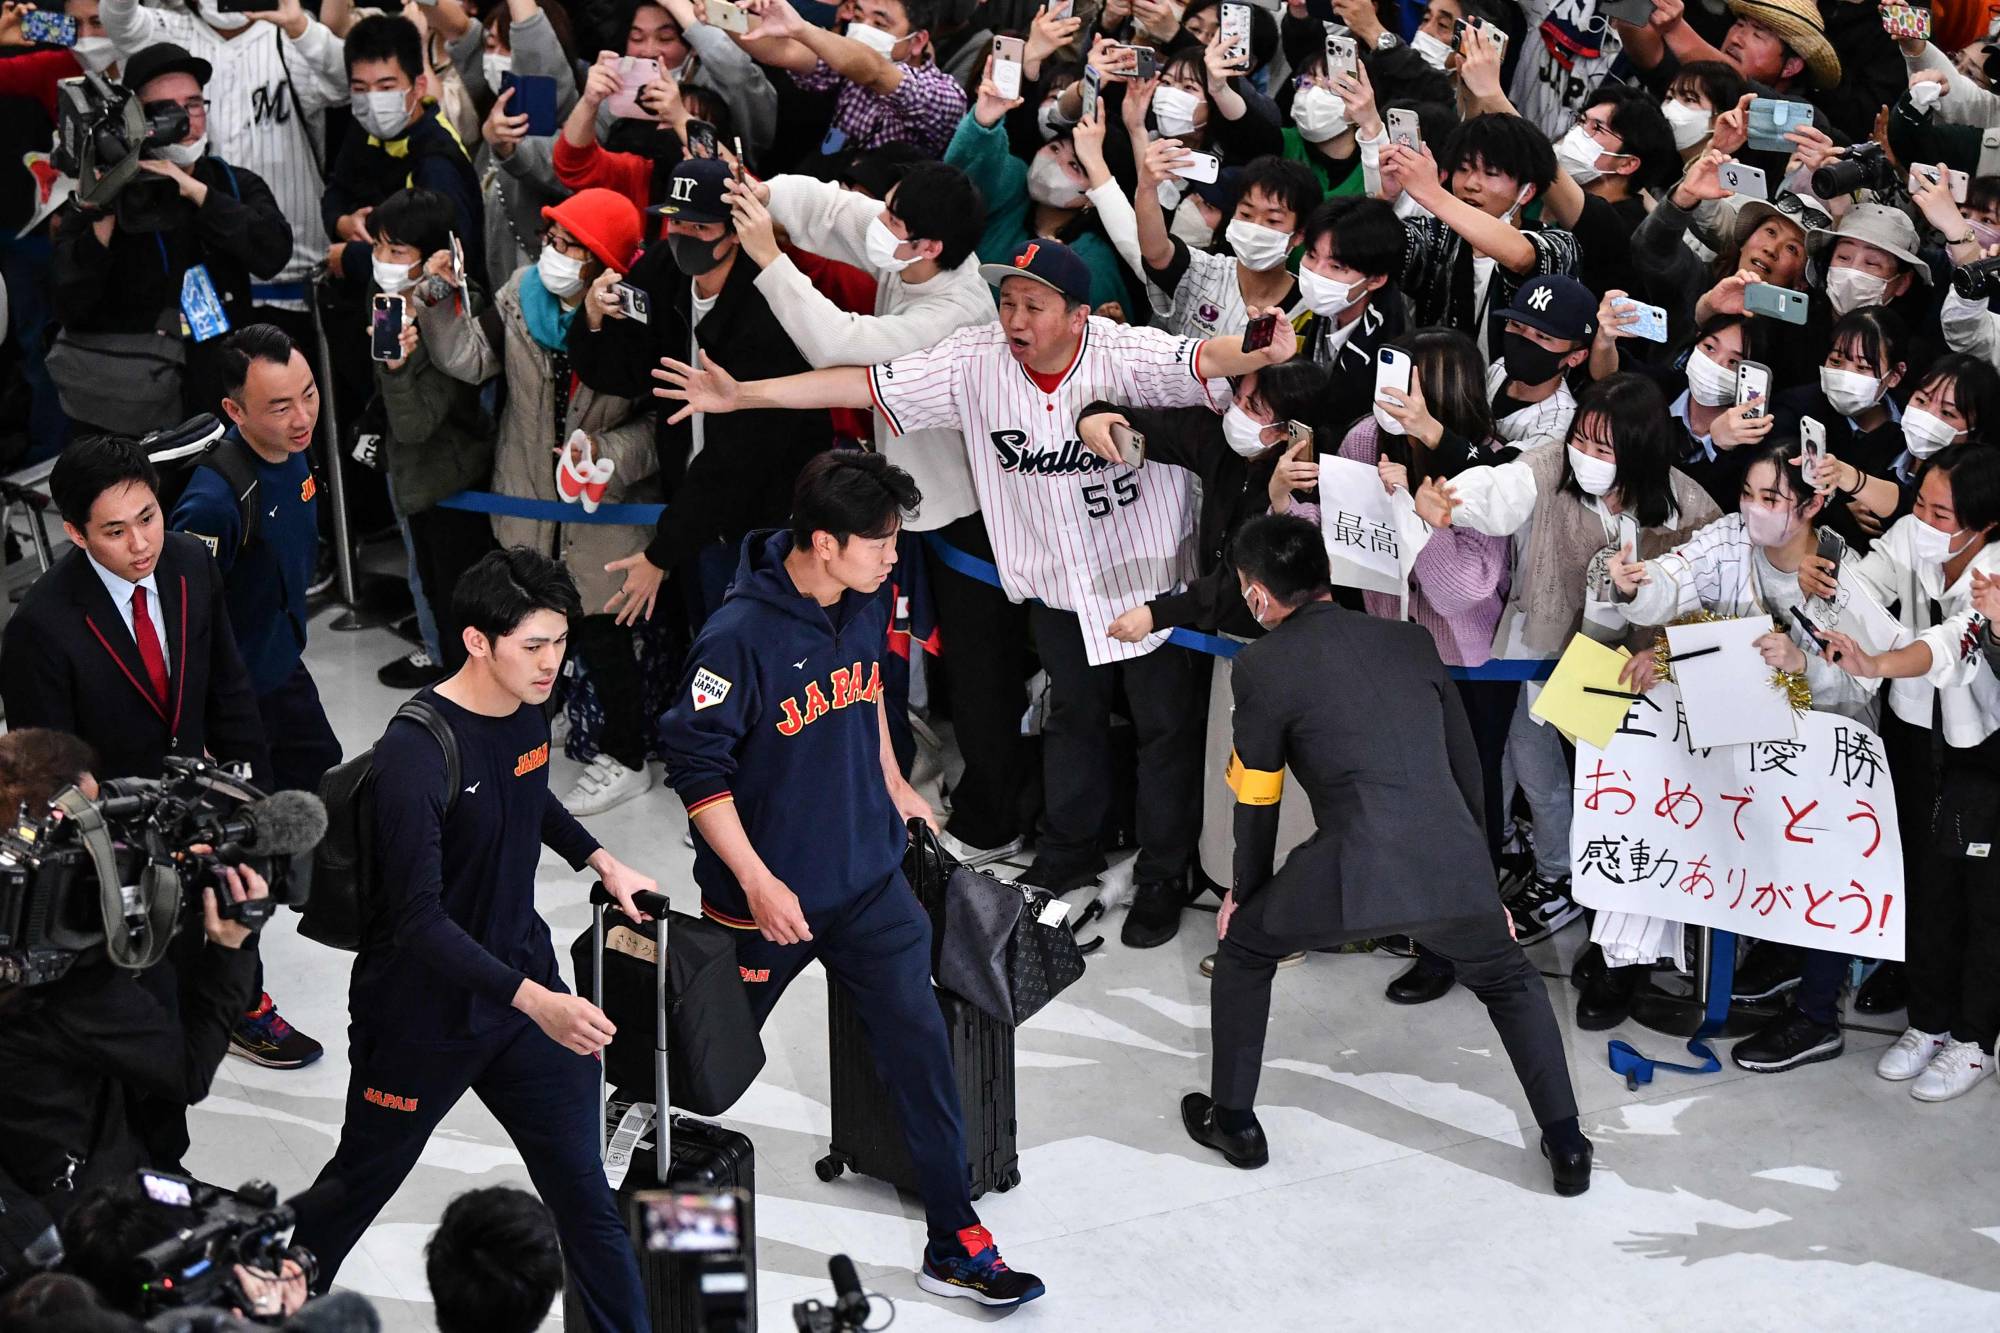 Japan's World Baseball Classic glory spurs fan frenzy at home 